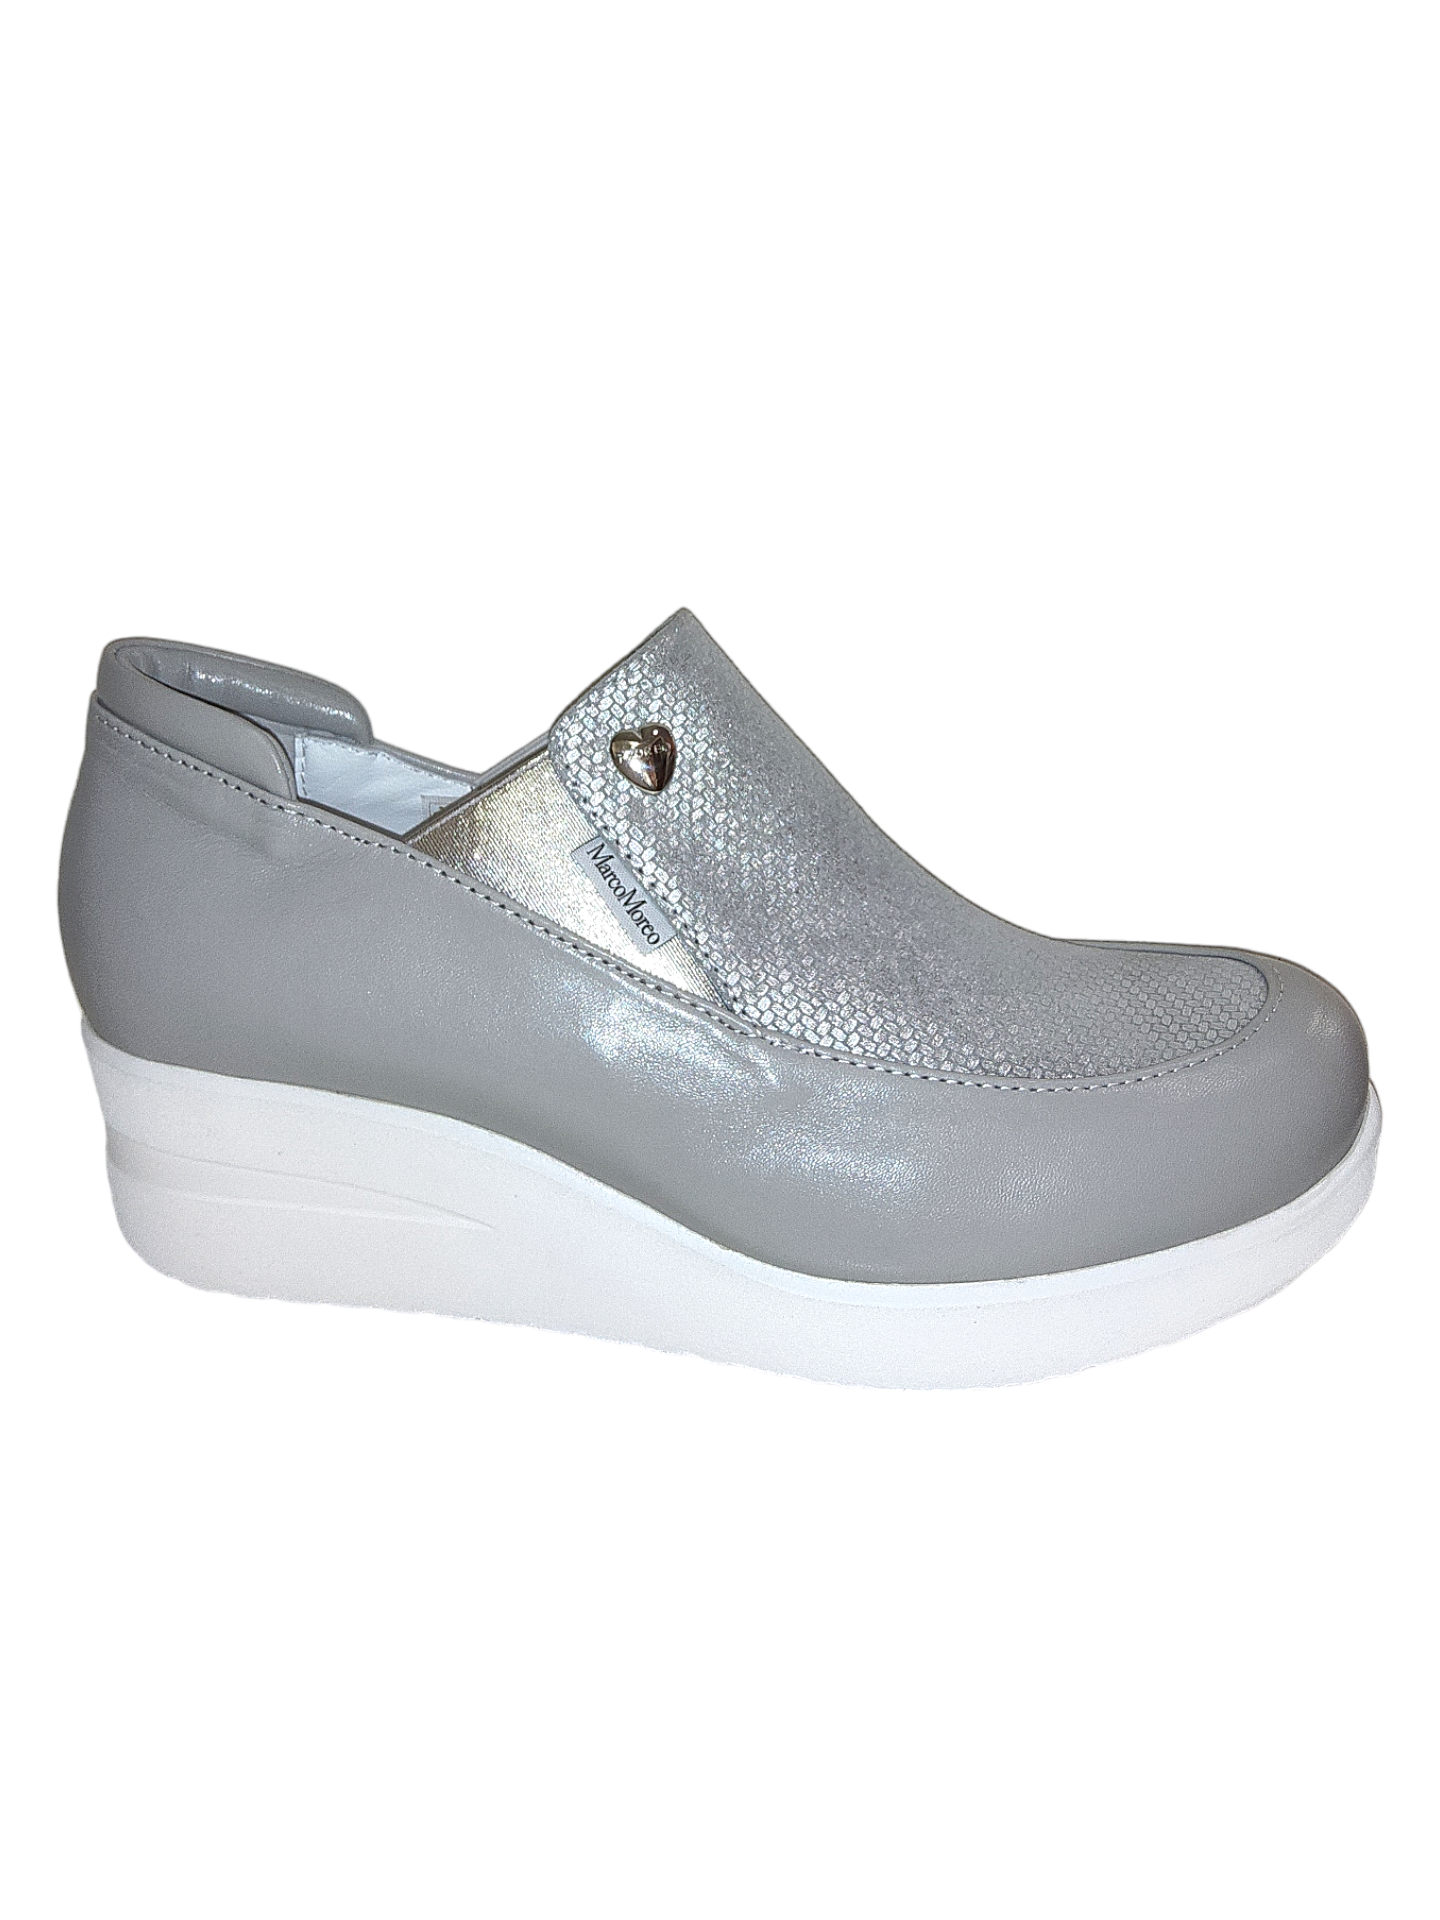 Grey leather wedge shoe